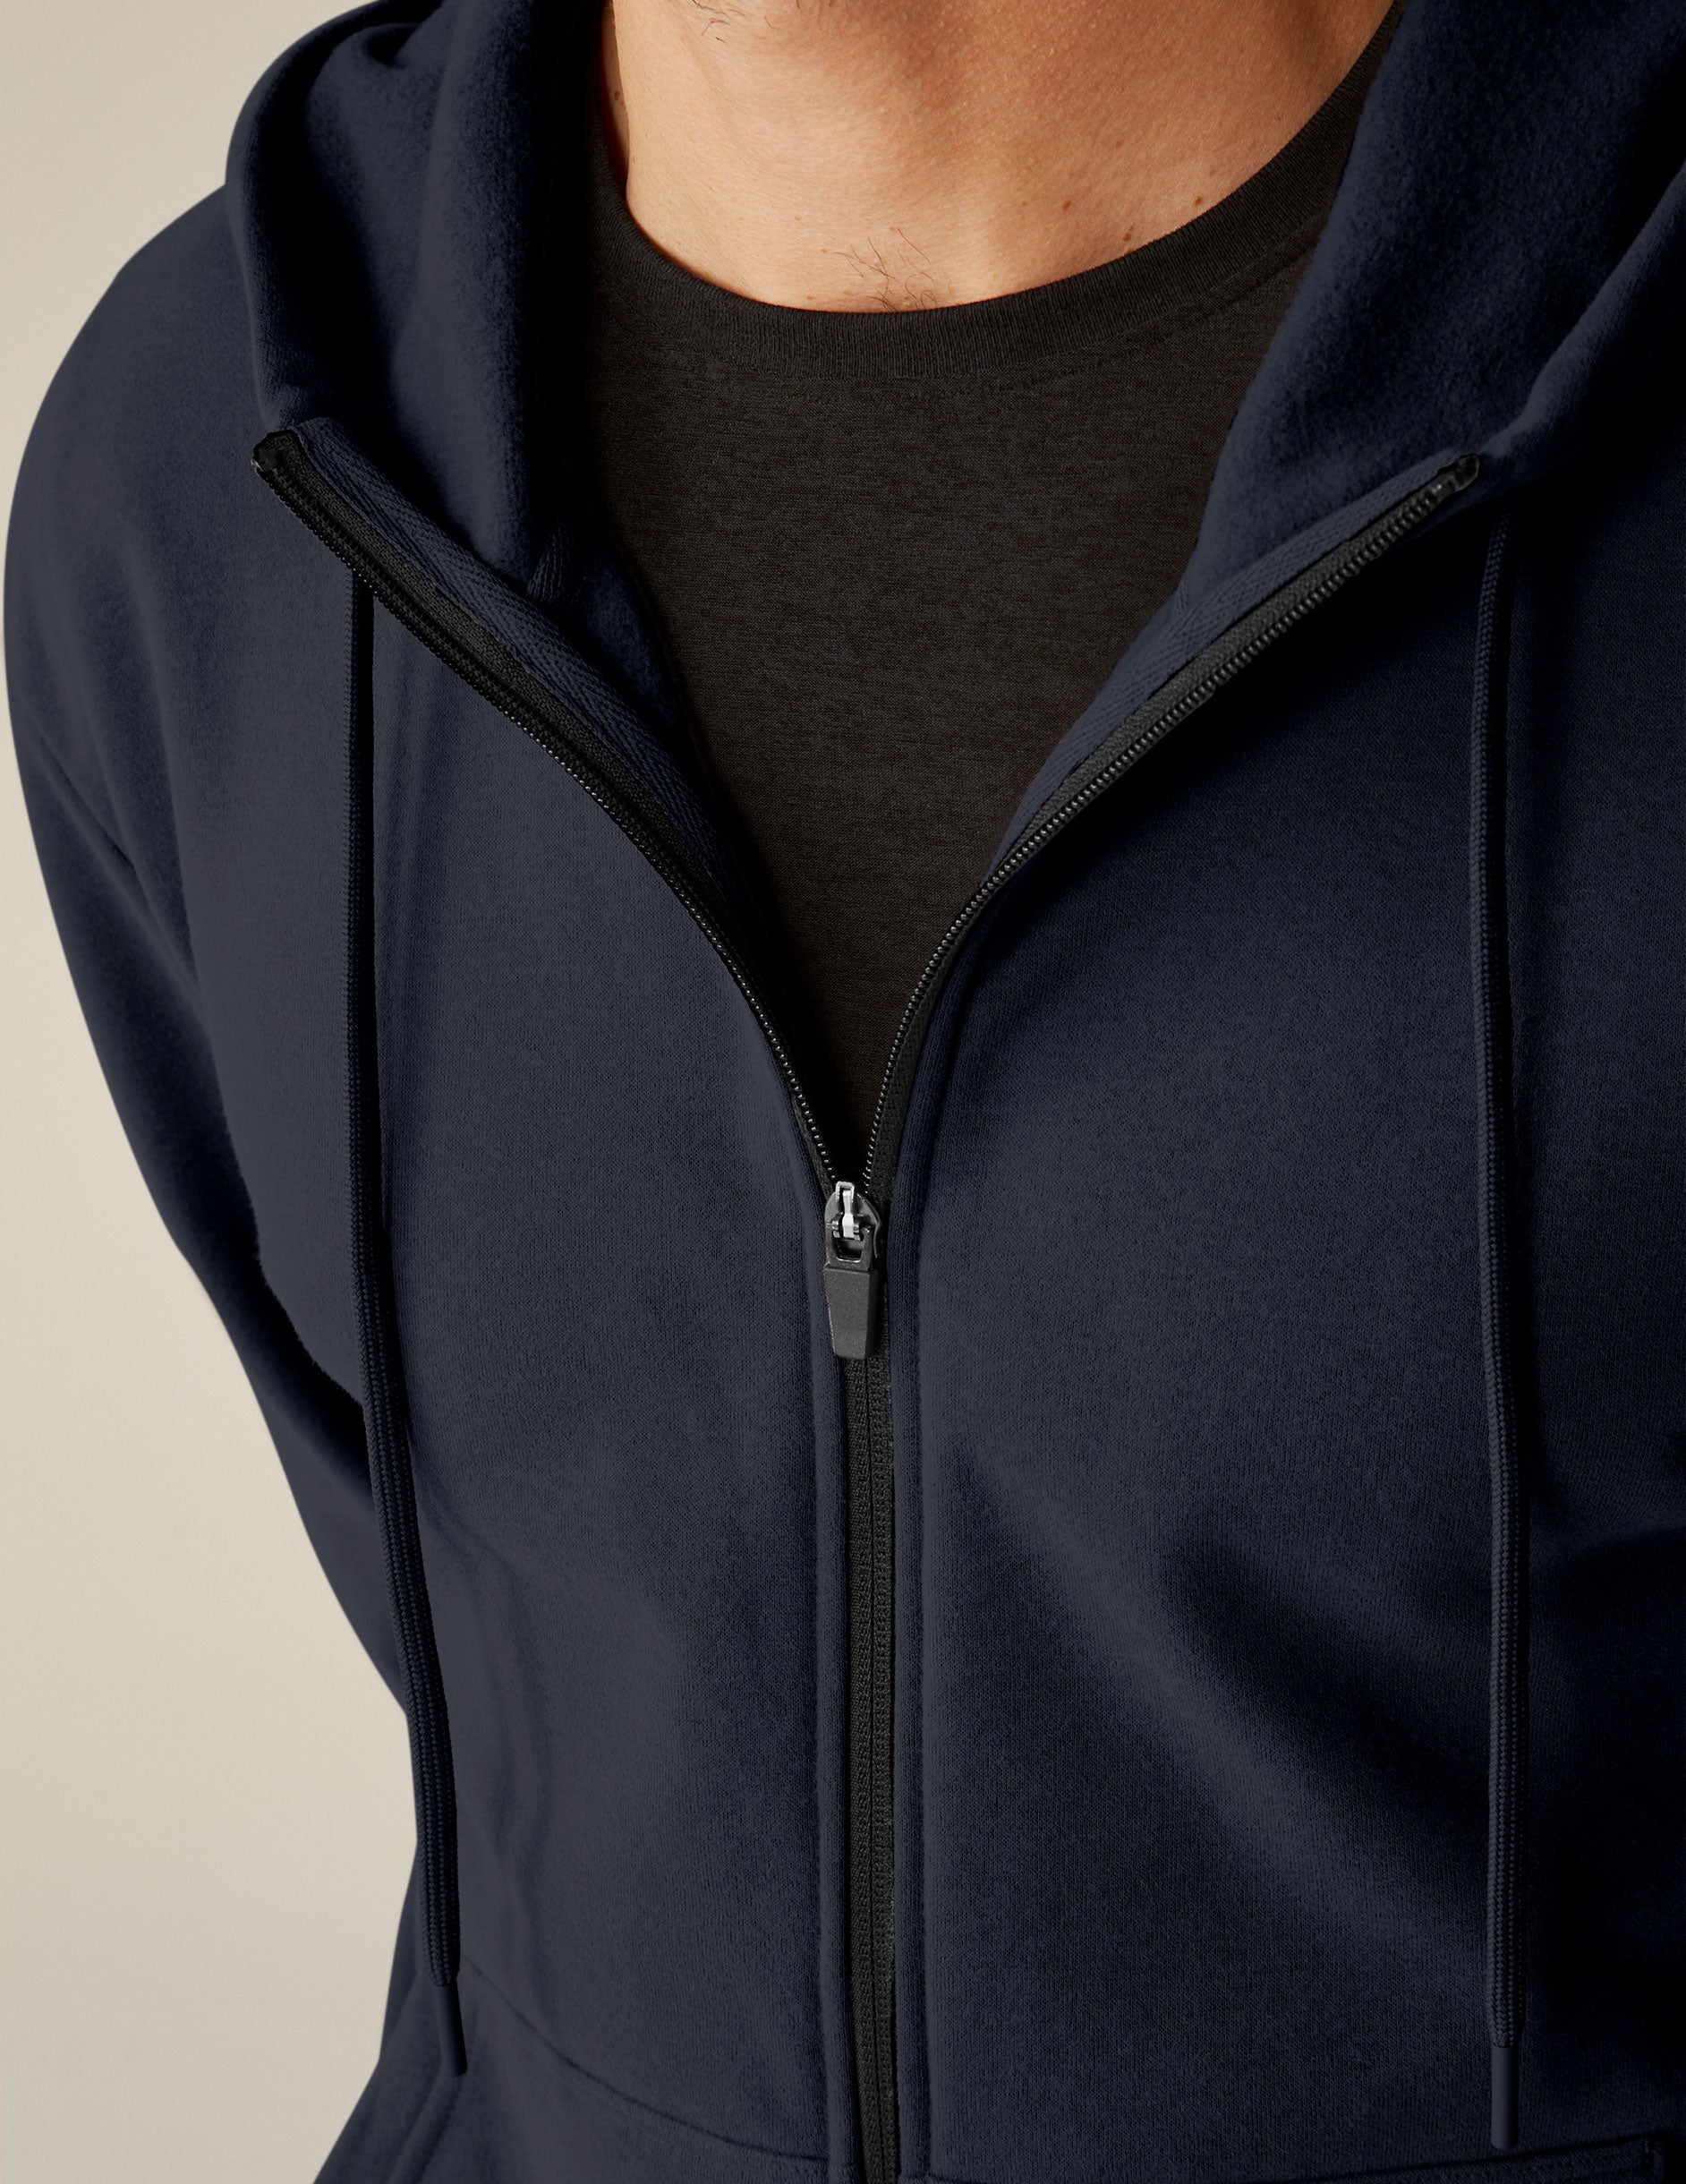 blue mens zip-up jacket with a hoodie. 